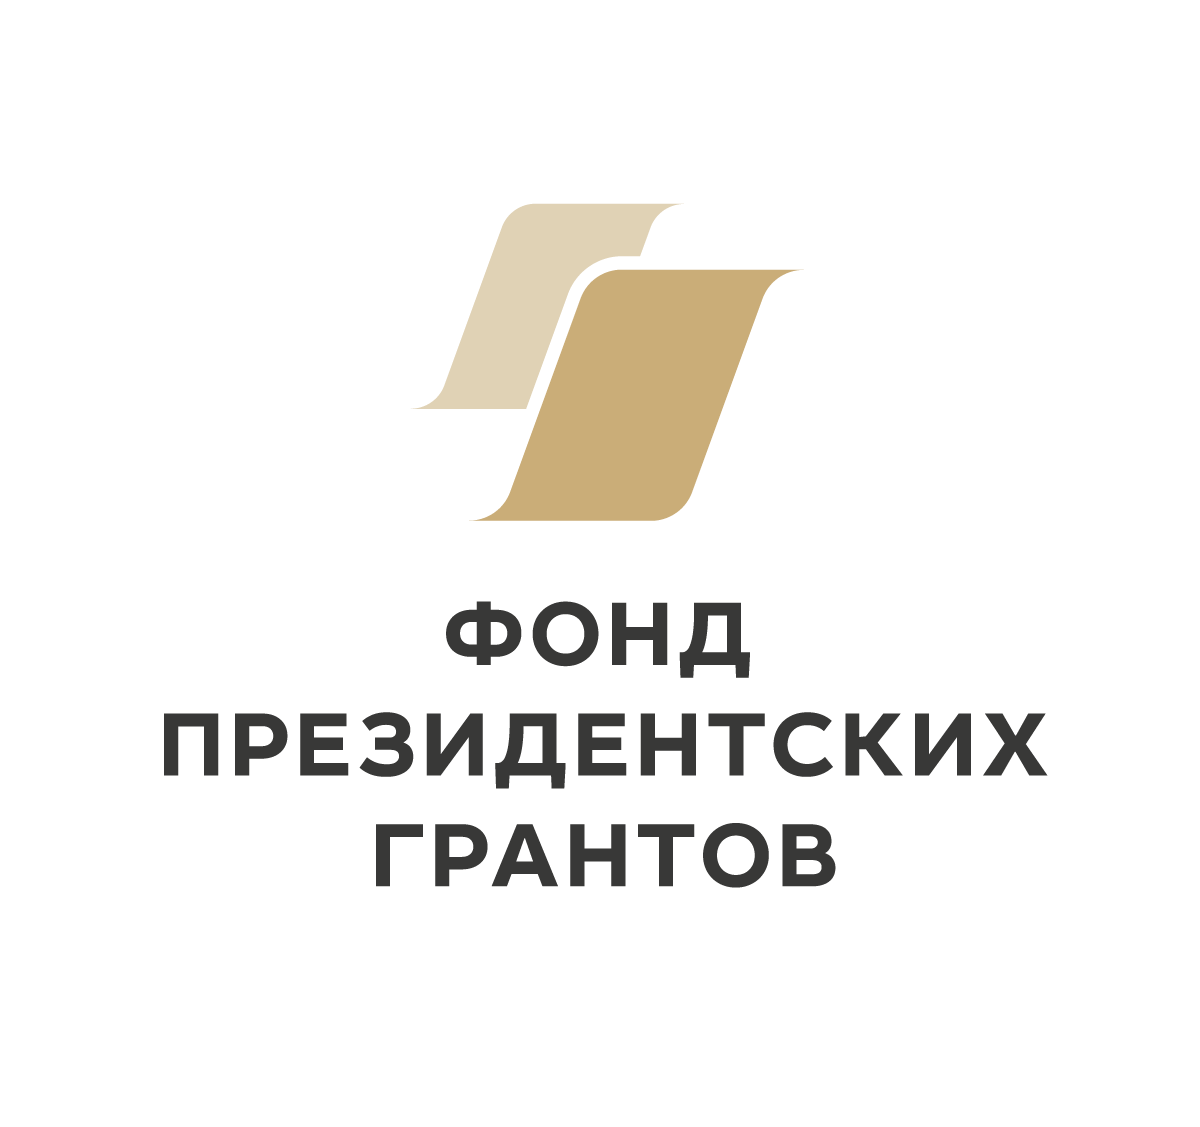 pgrants logo vertical